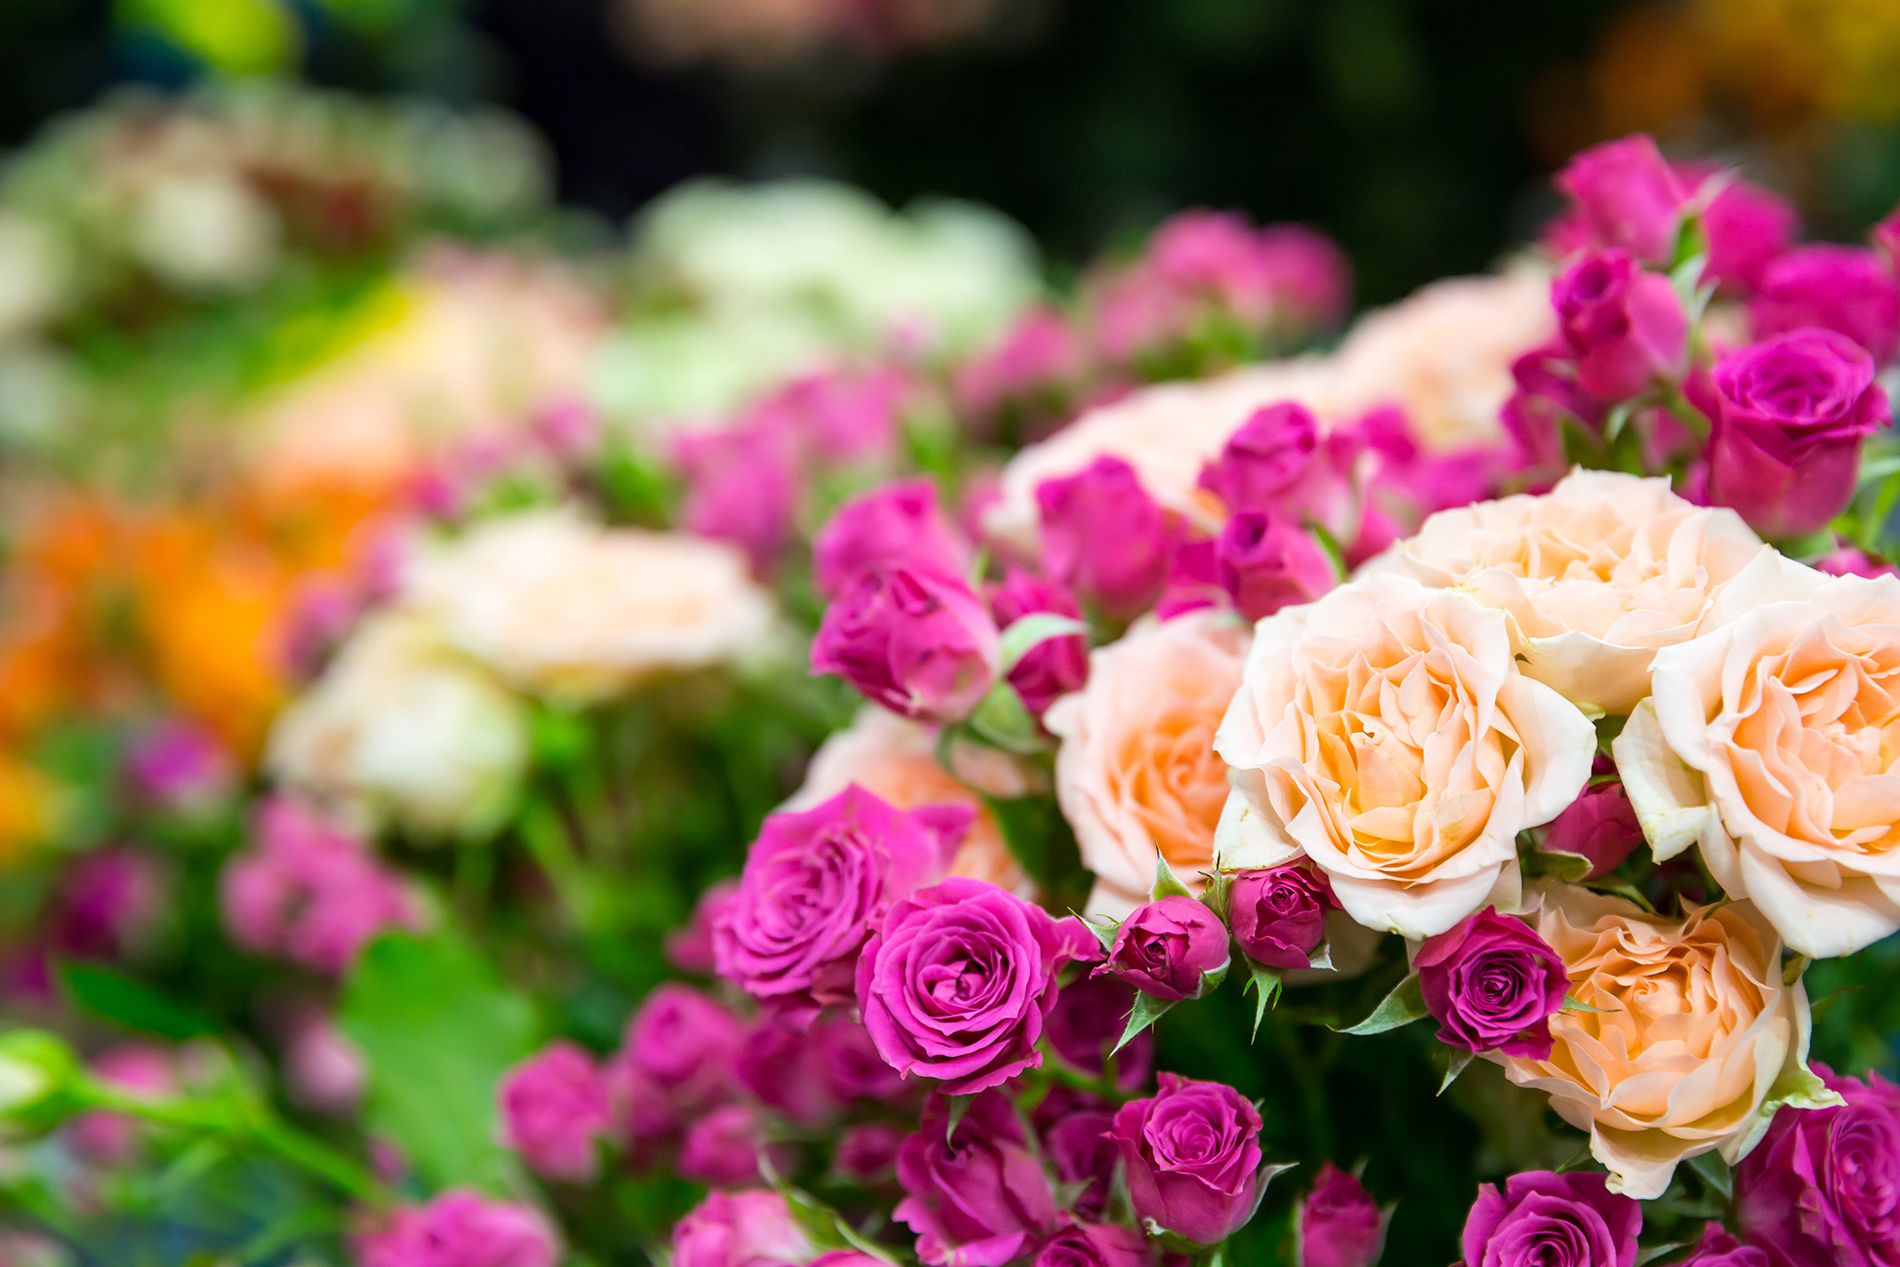 El jardín de rosas moradas 53646 - Fondos de flores - Flores